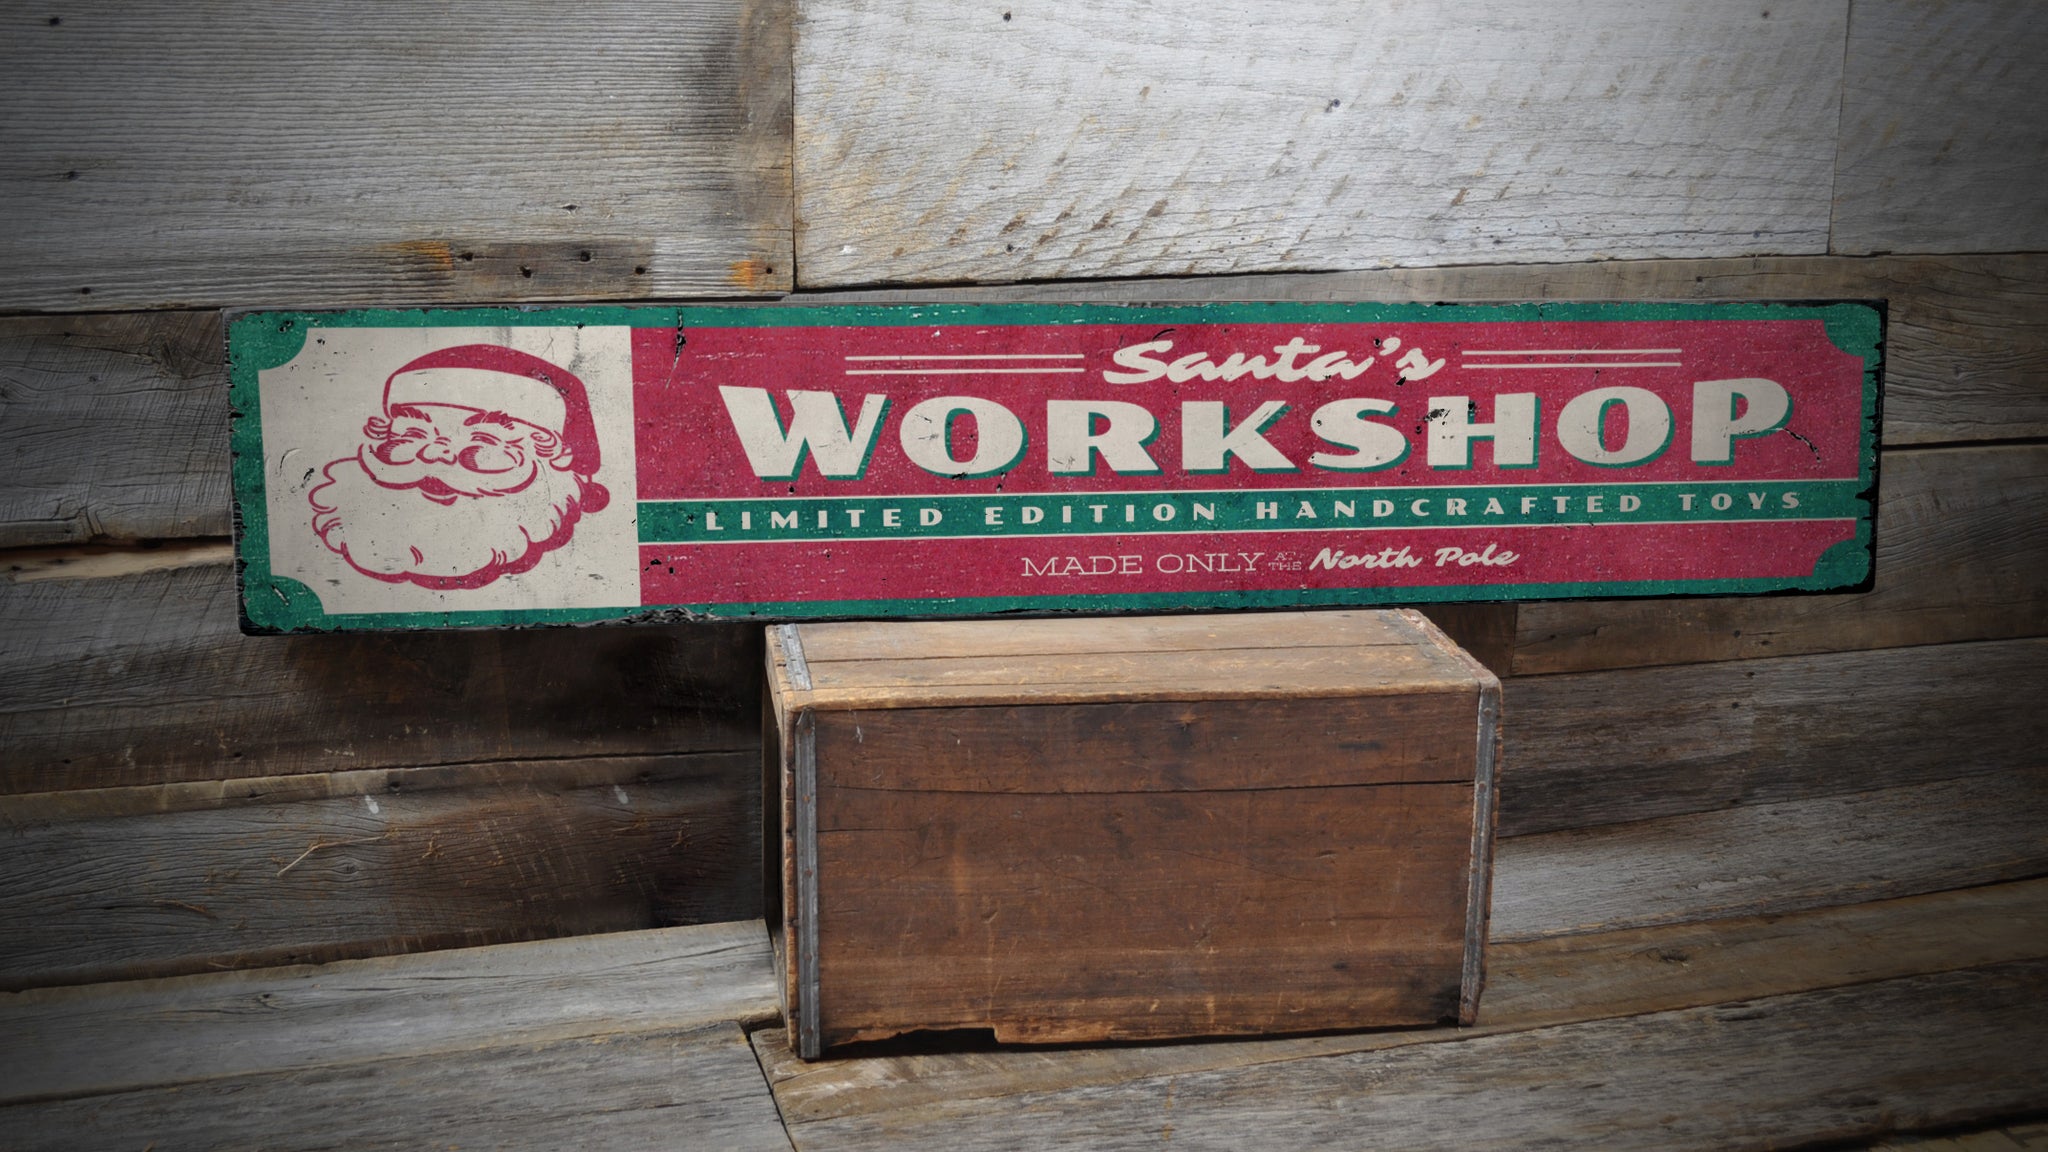 Santas Workshop Handcrafted Toys Rustic Wood Sign